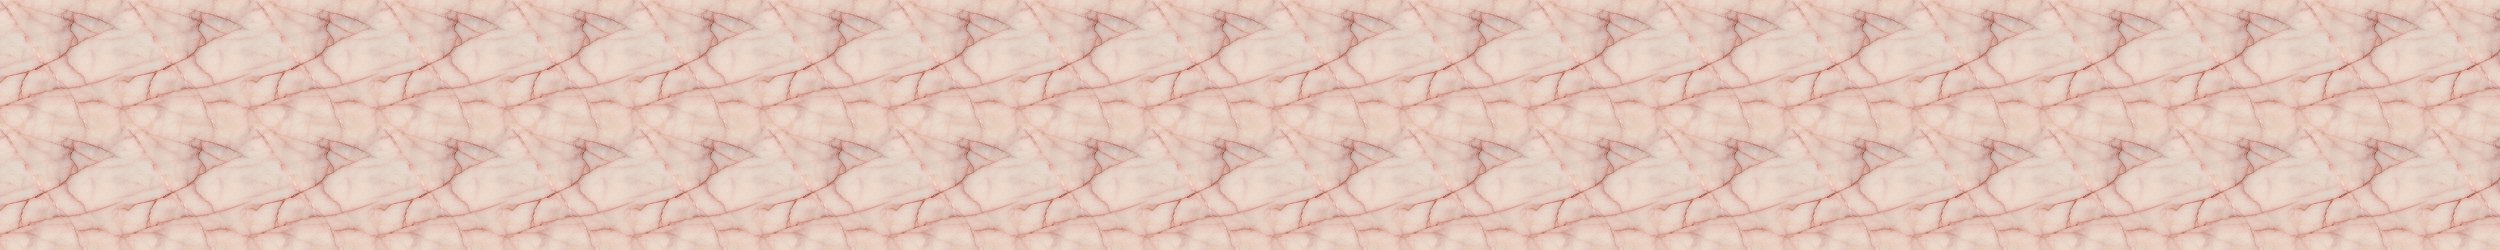 Pink Marble divider